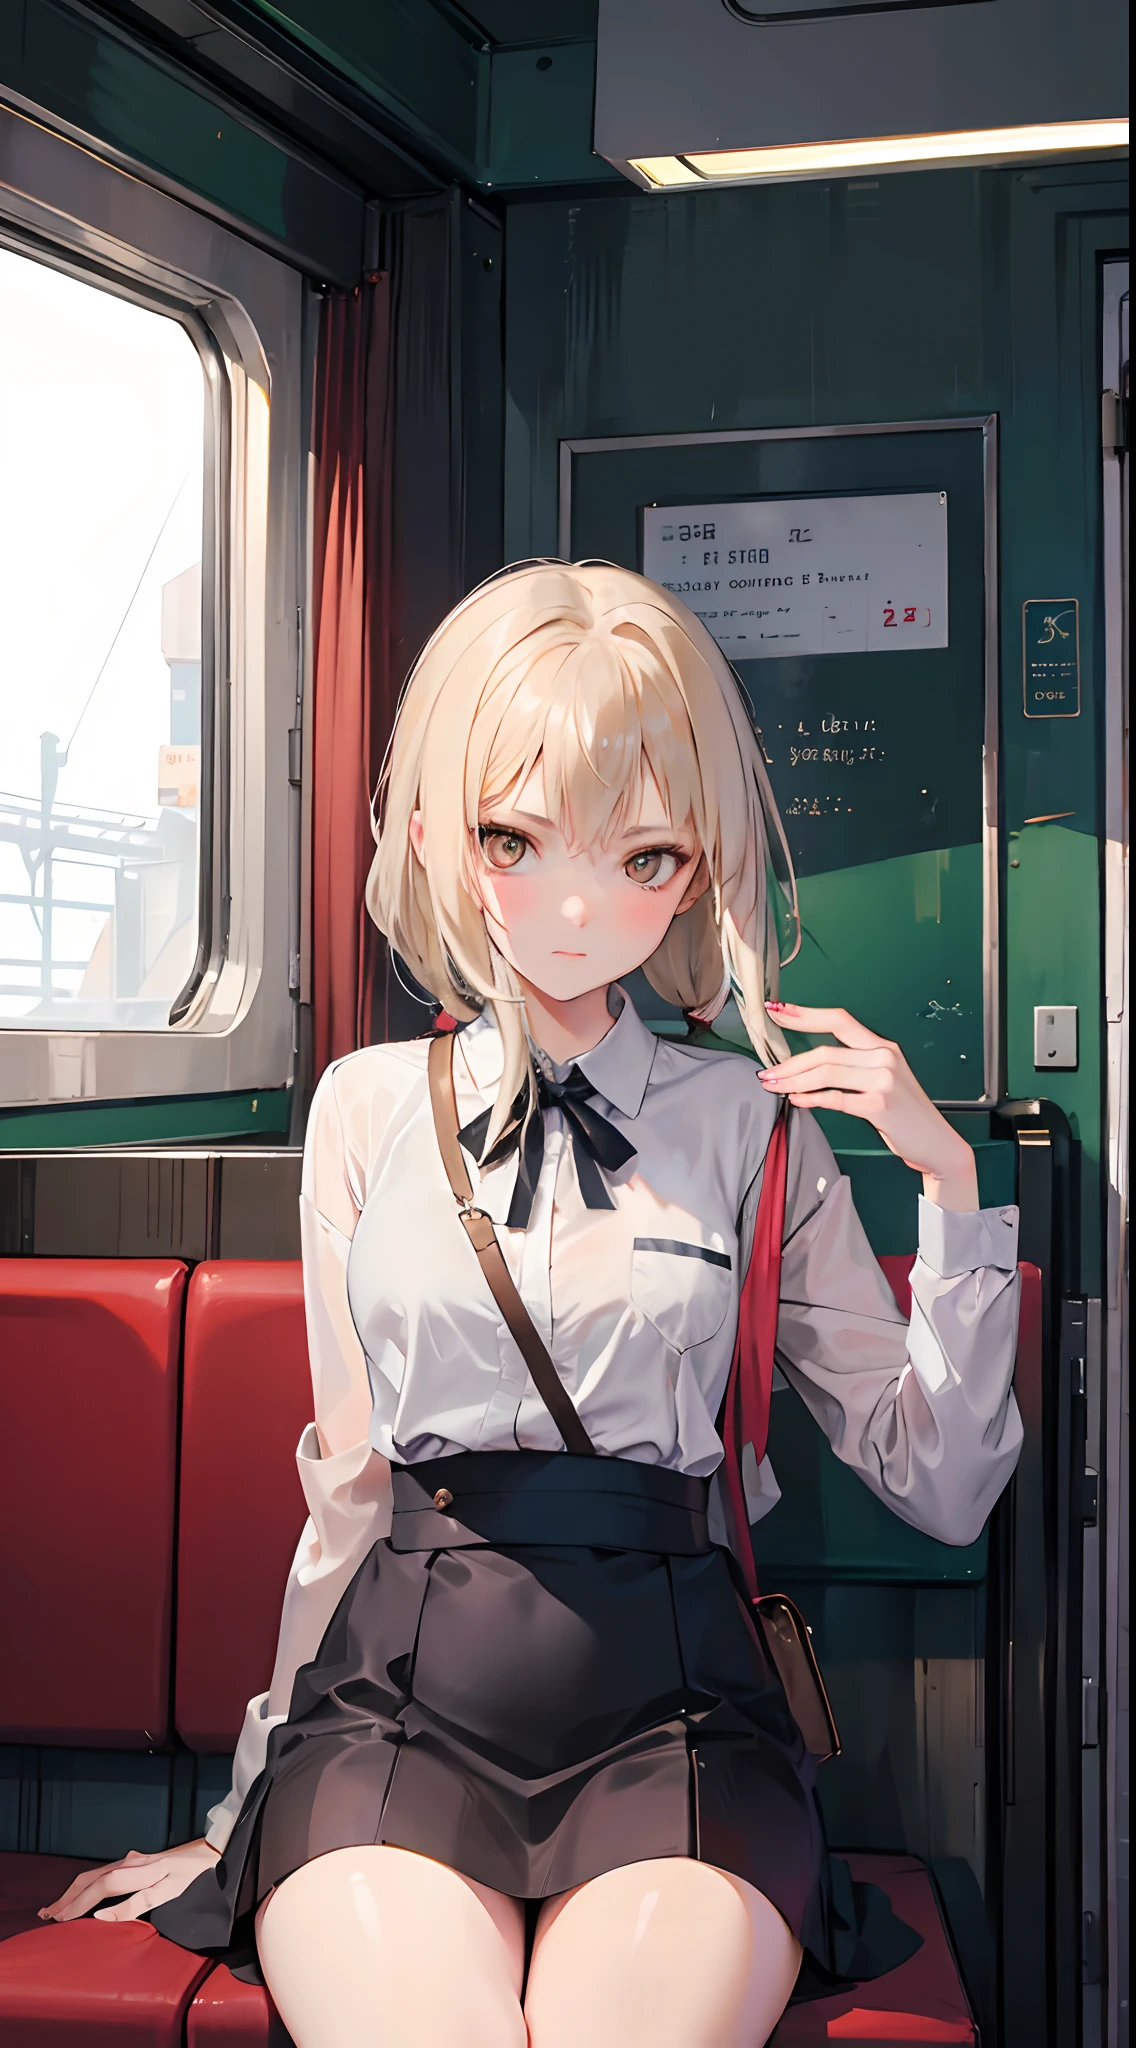 Chica sentada en el tren de clase vip